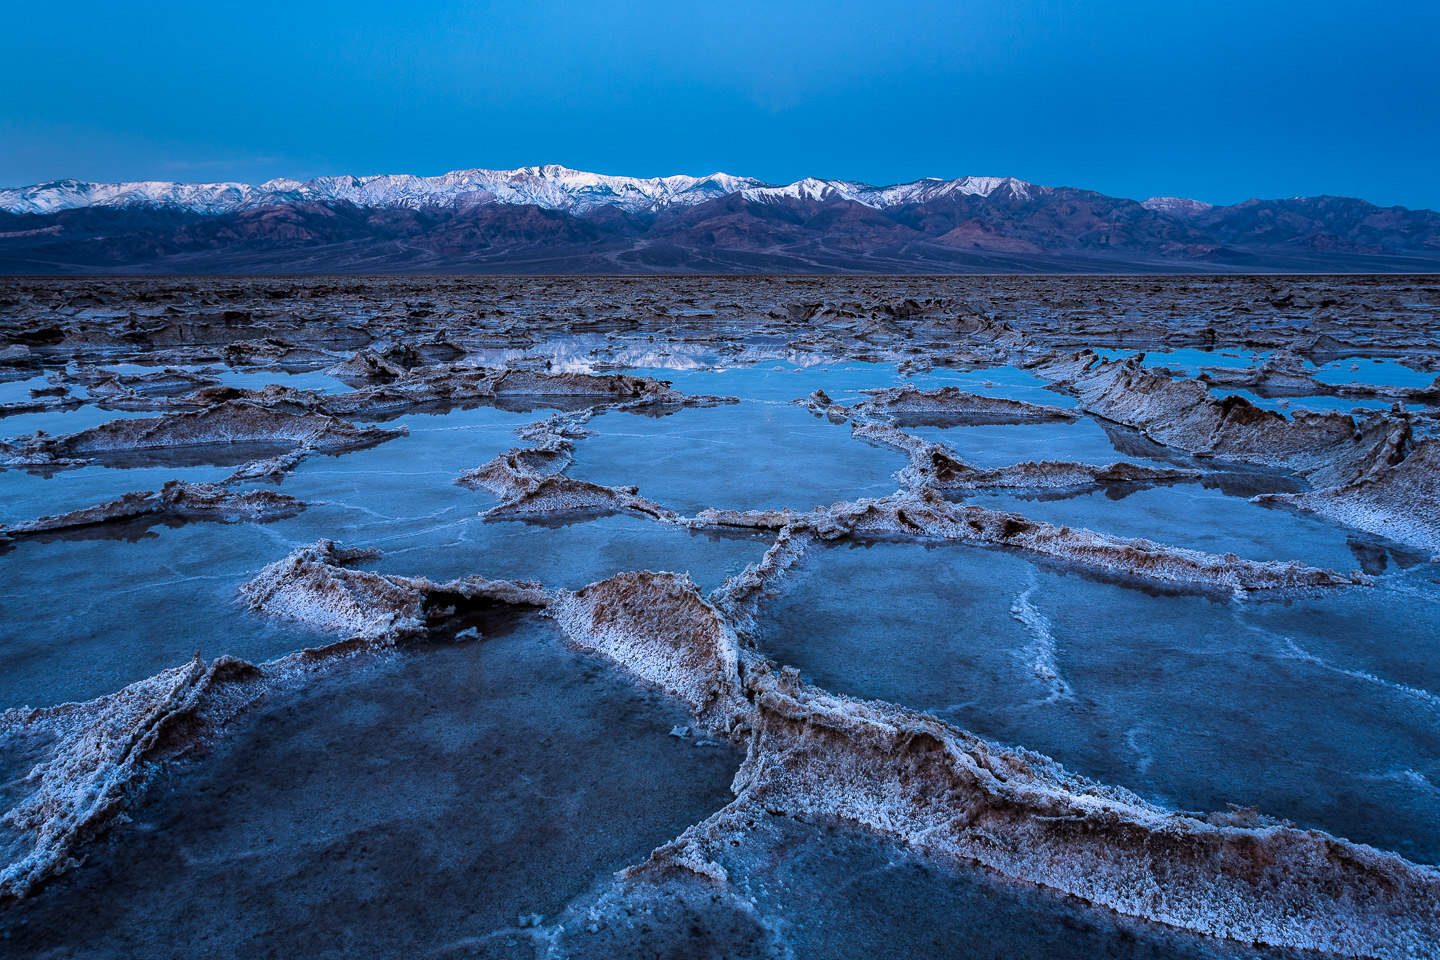 The Badlands salt flats in Death Valley NP.